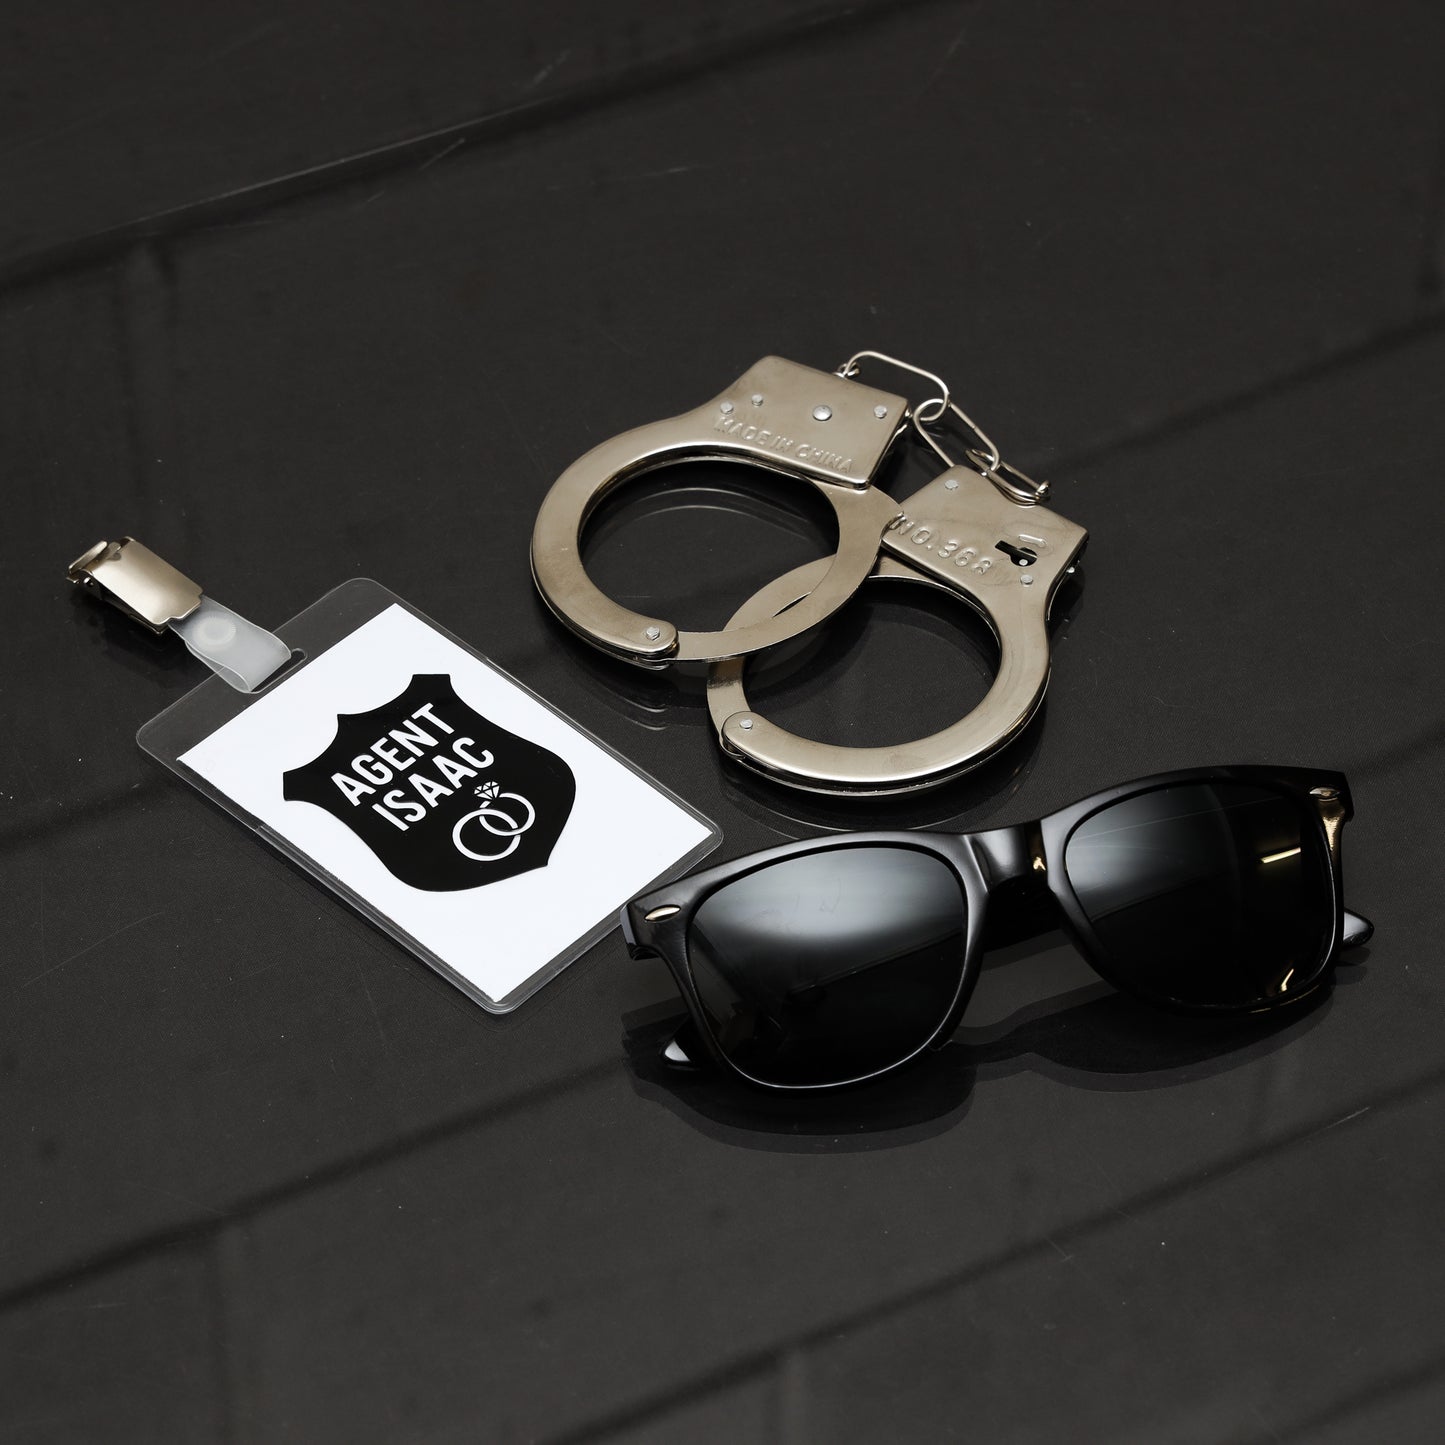 Personalised Pageboy Ring Security Box Briefcase  - Always Looking Good -   